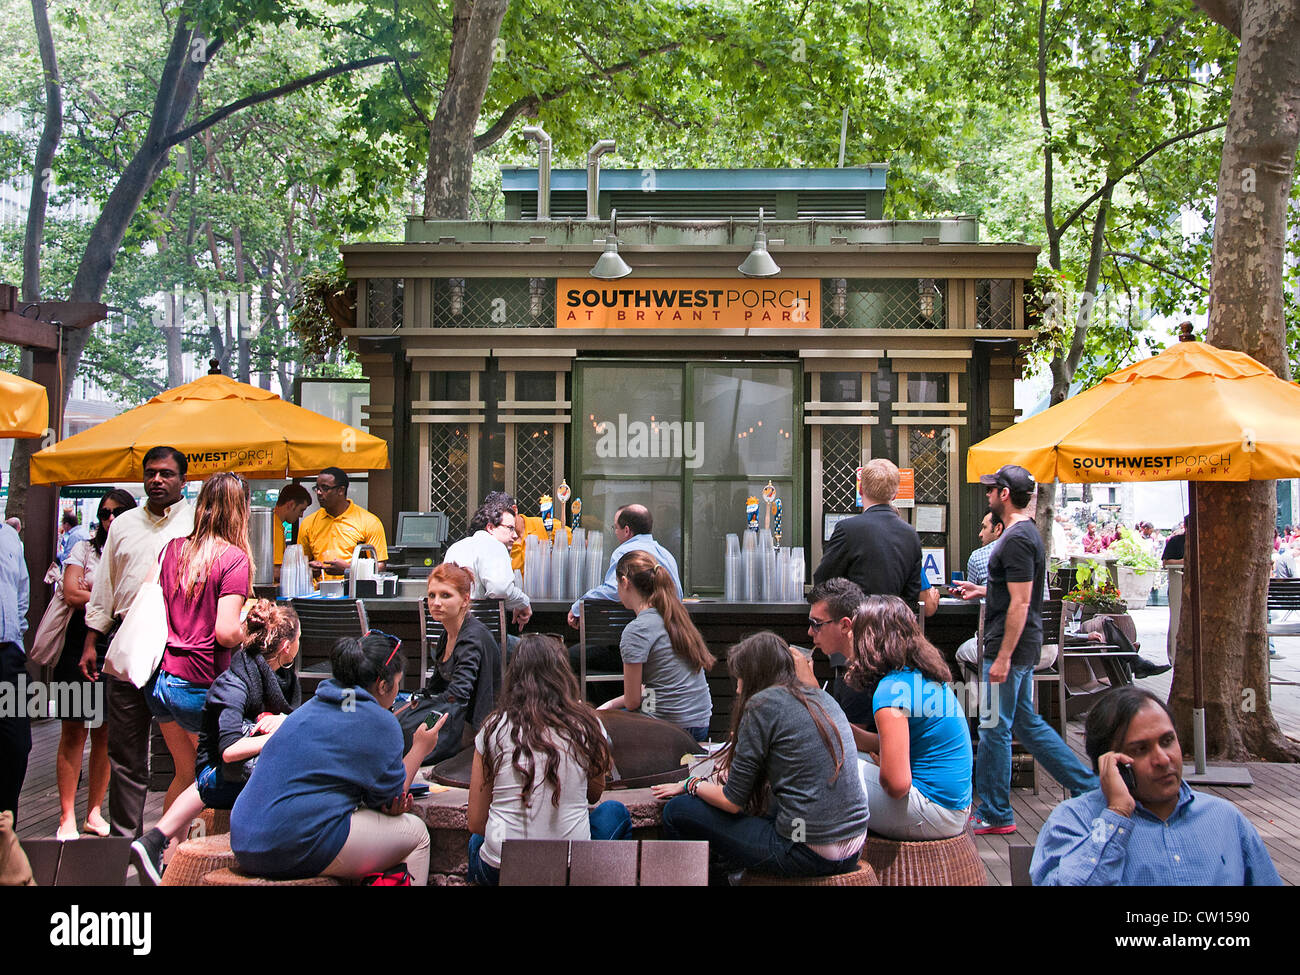 Bryant Park Southwest Porch Pavement Street Bar Pub Cafe   Manhattan New York City United States of America Stock Photo